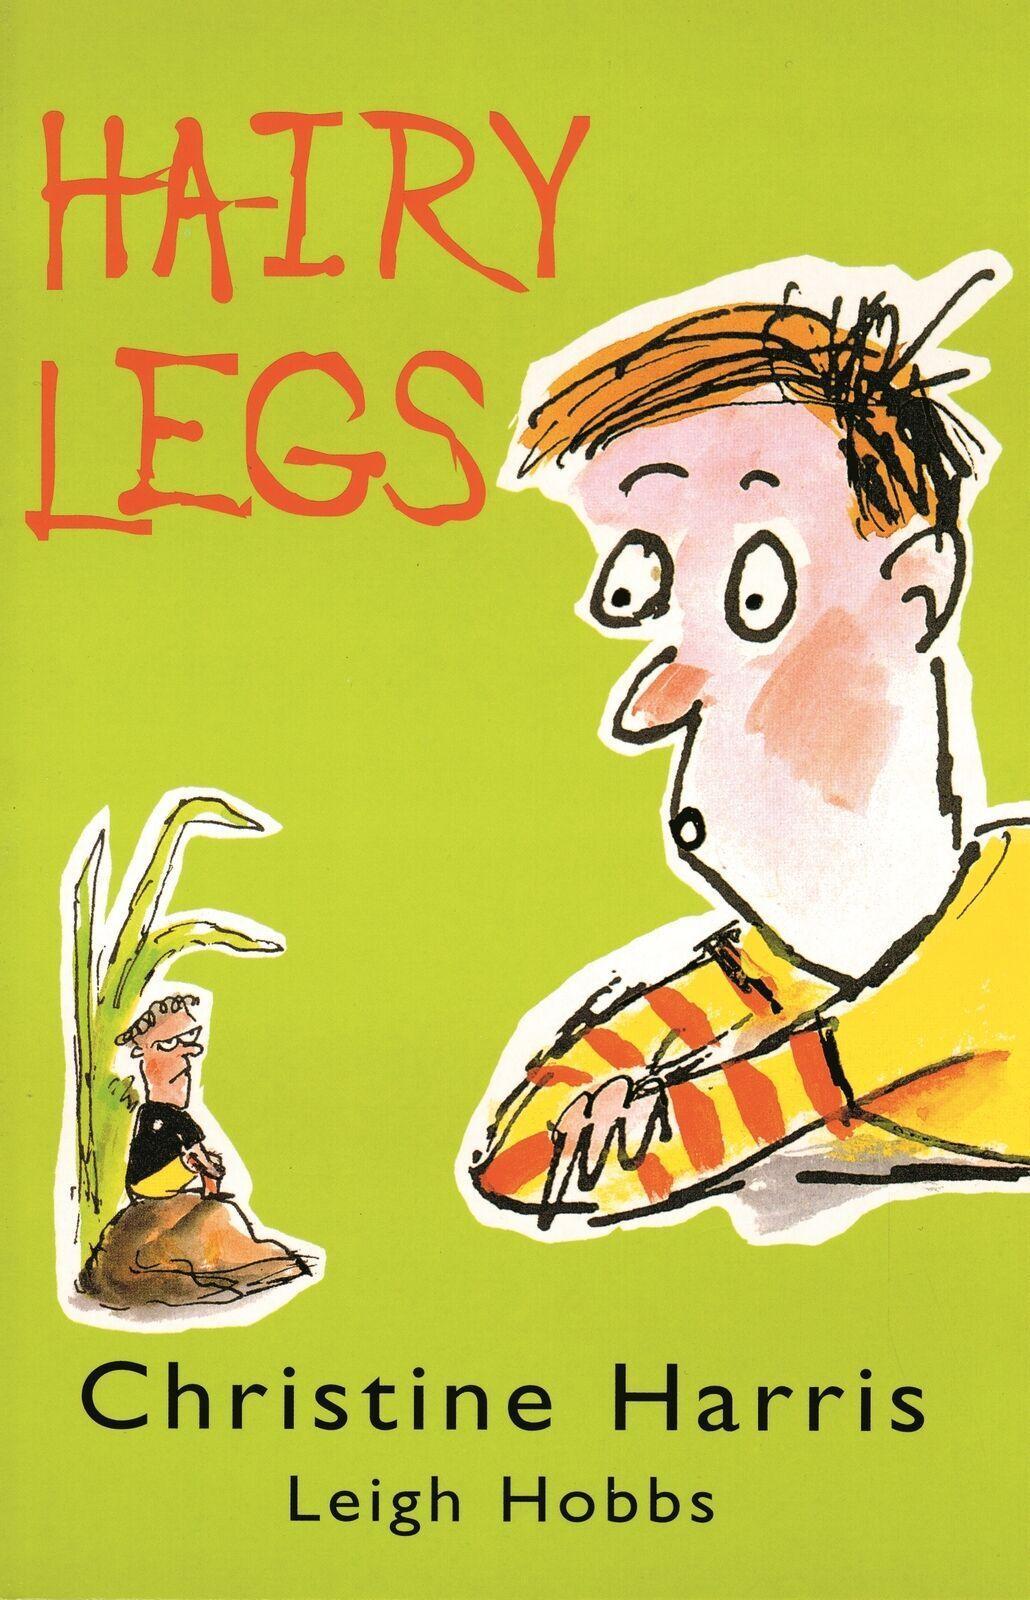 Hairy Legs -Christine Harris Children's Book